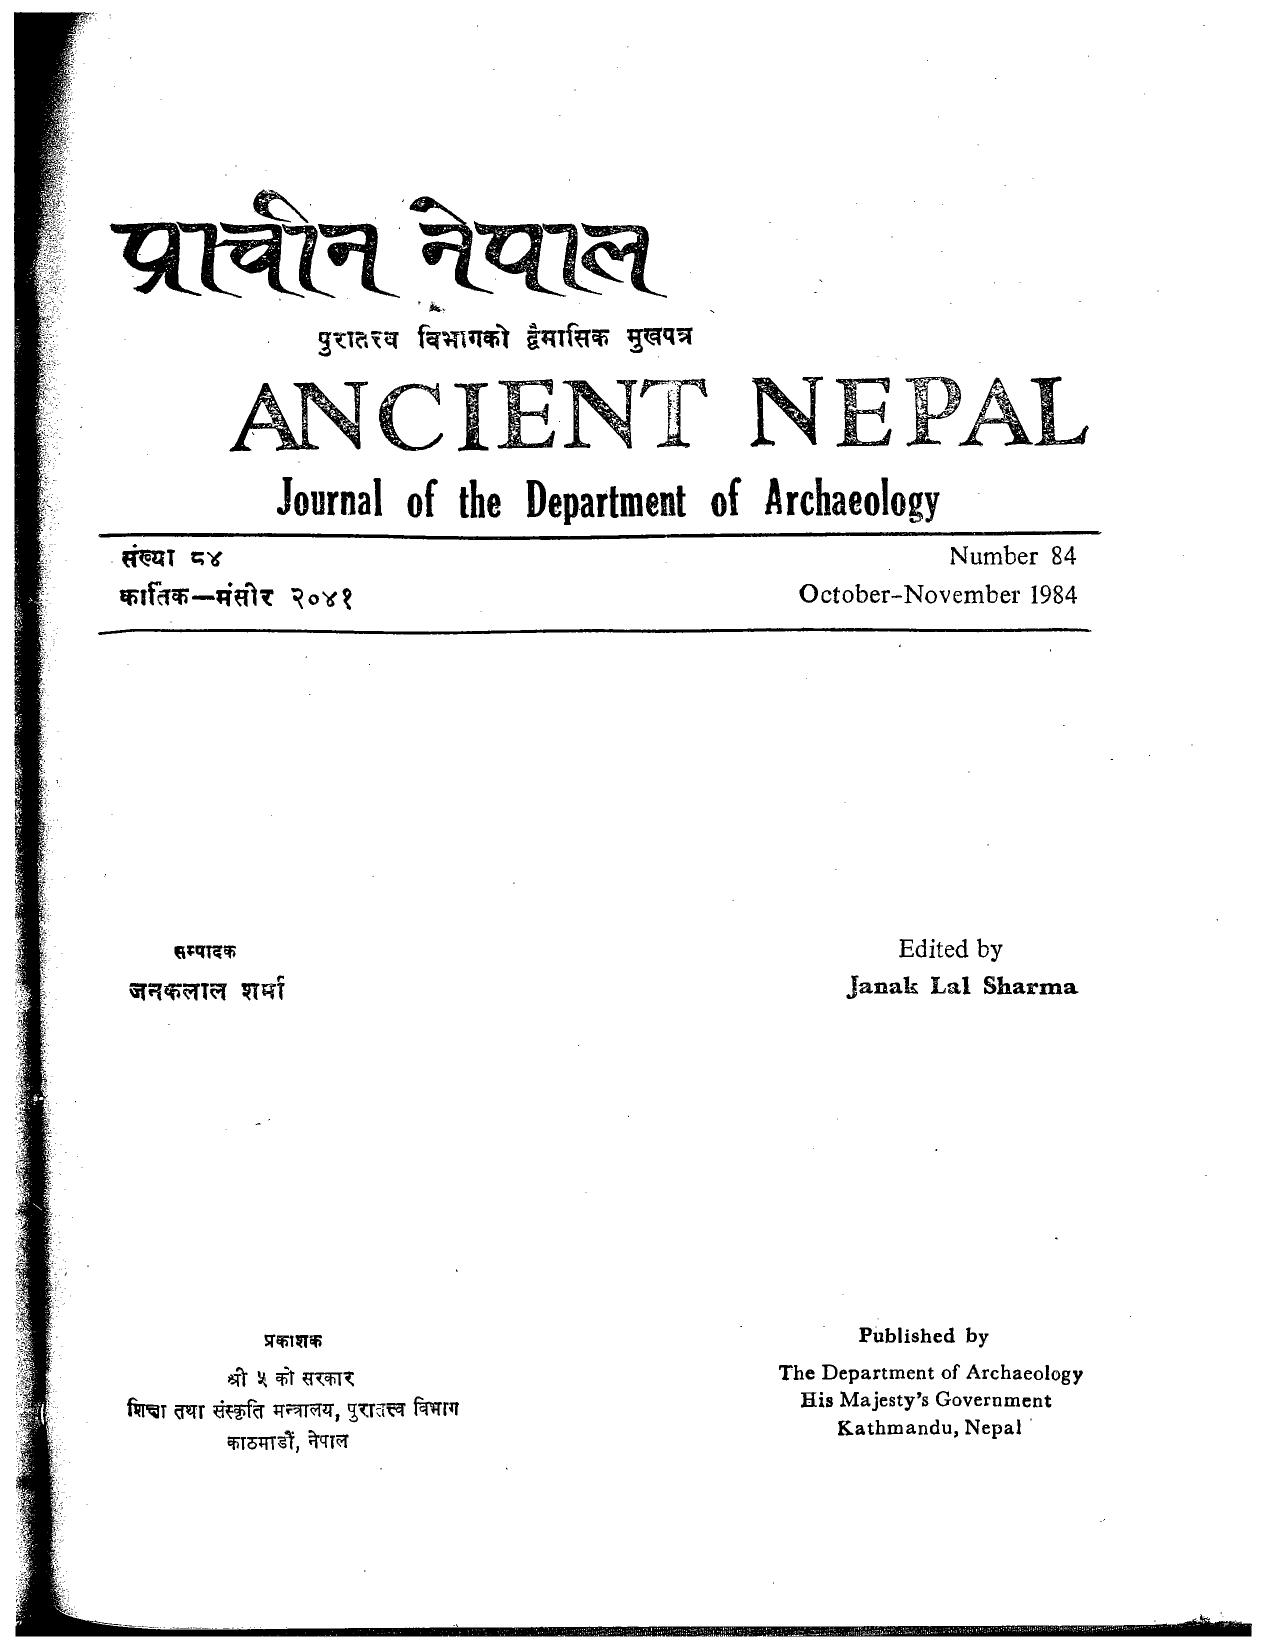 Ancient Nepal 84